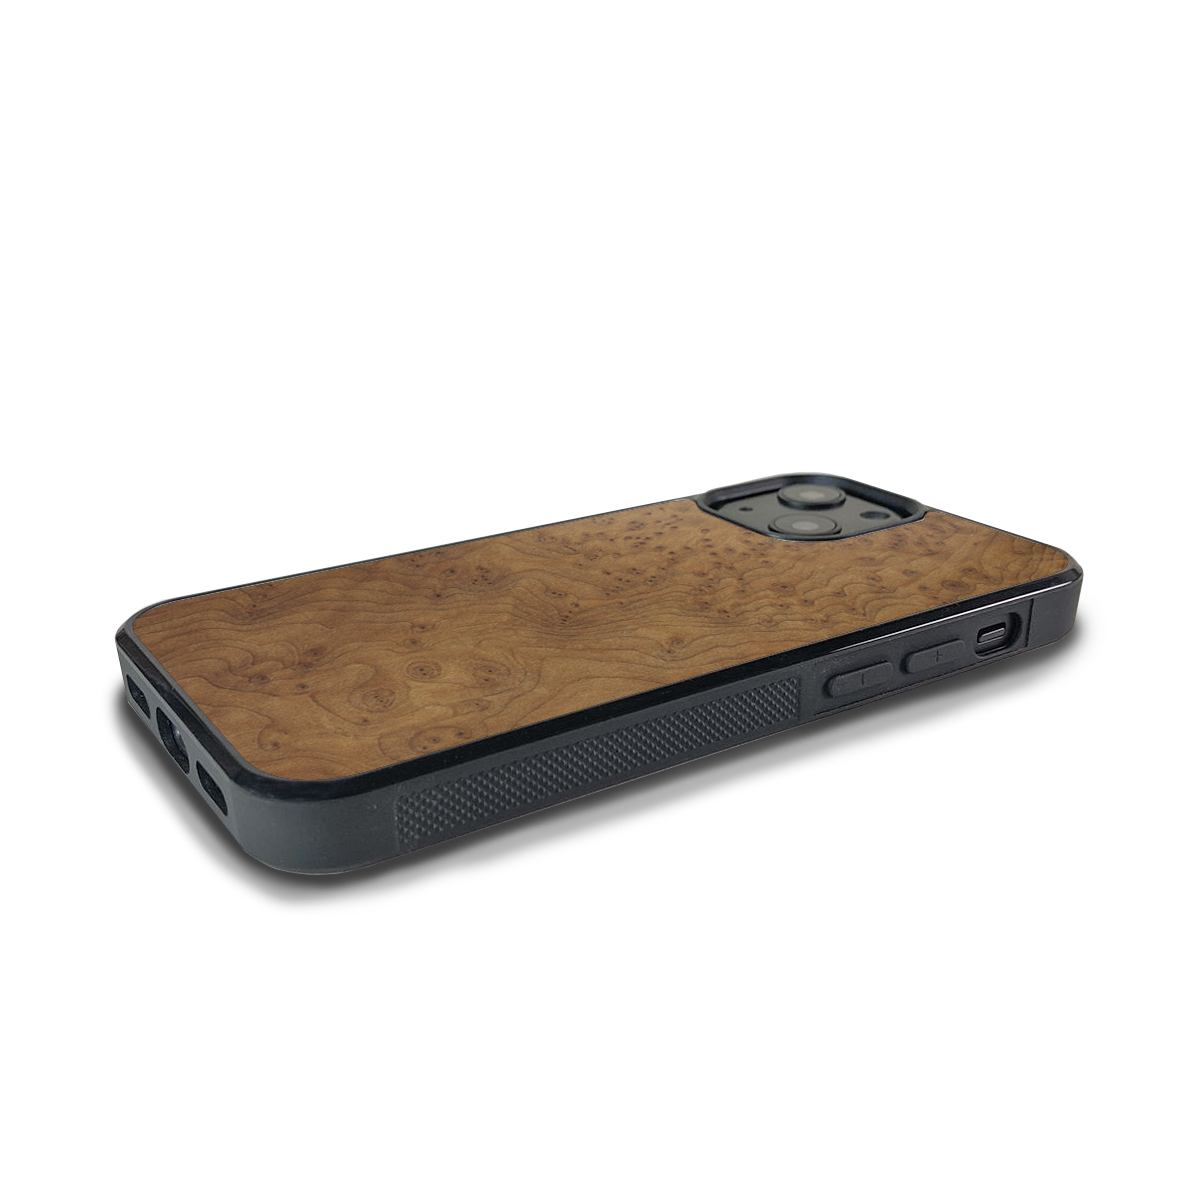 iPhone 15 Plus — #WoodBack Explorer Case